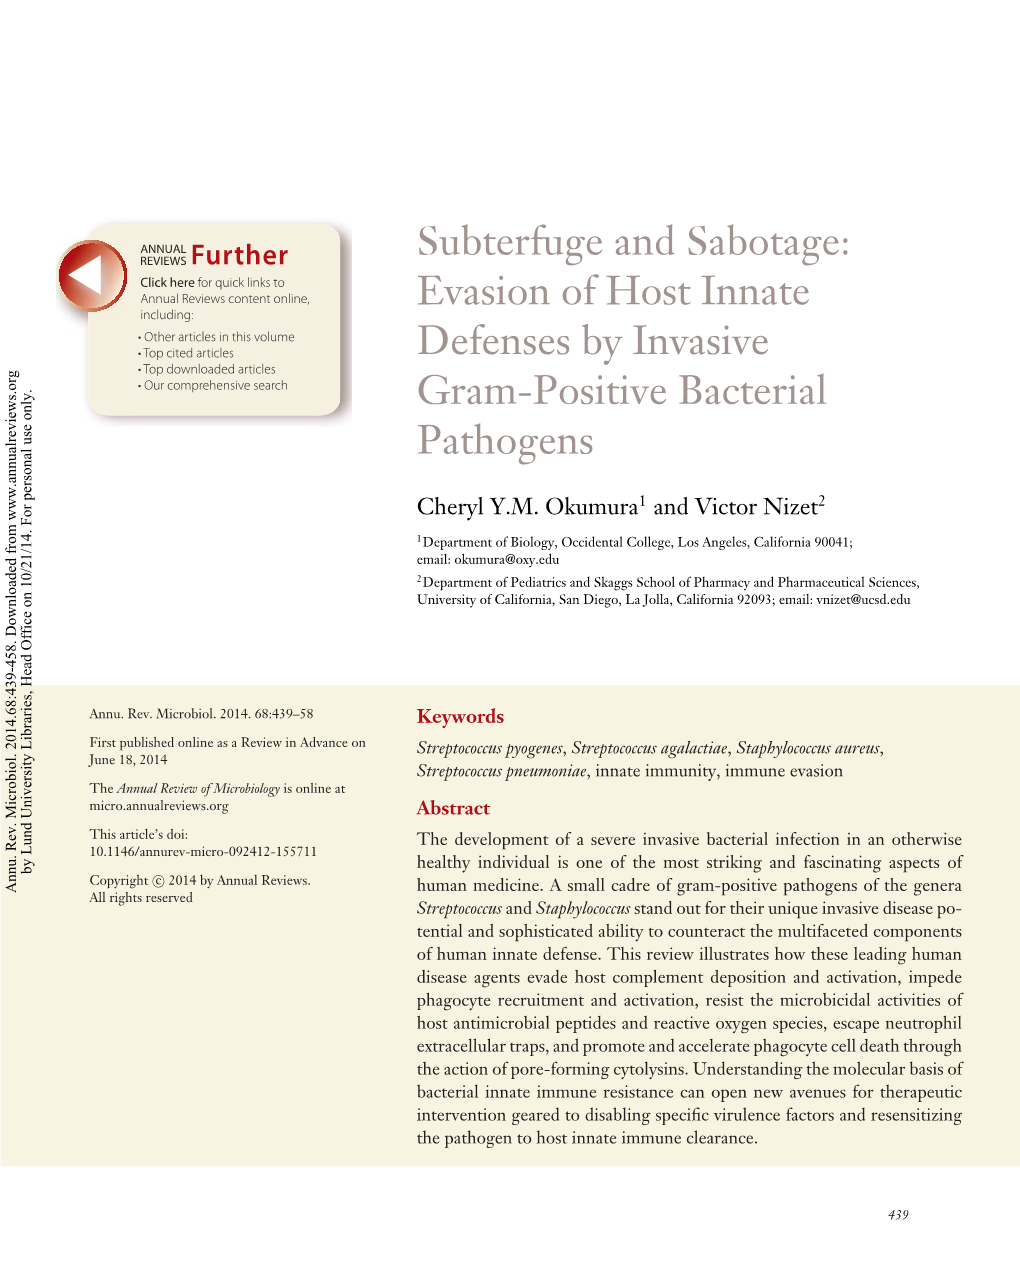 Subterfuge and Sabotage: Evasion of Host Innate Defenses by Invasive Gram-Positive Bacterial Pathogens